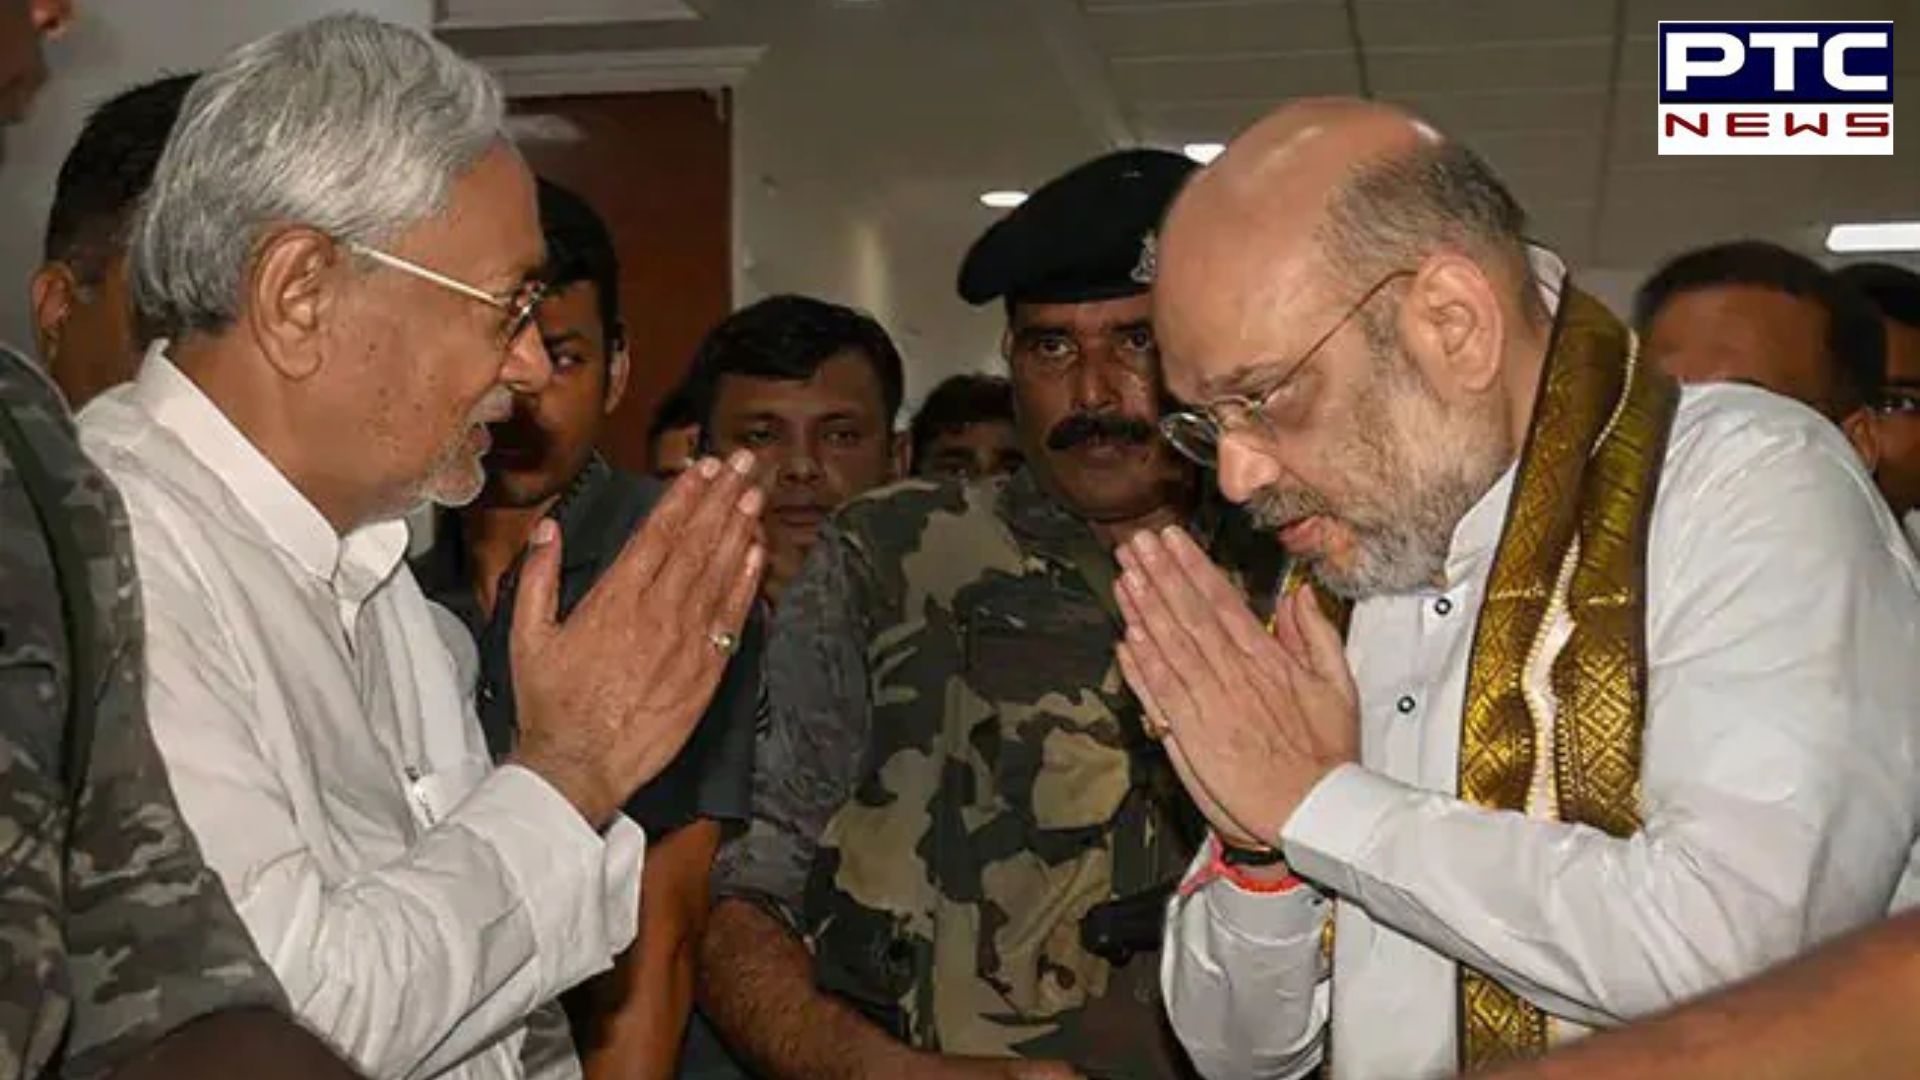 BJP takes lead in Bihar politics, surpassing Nitish Kumar in seat share